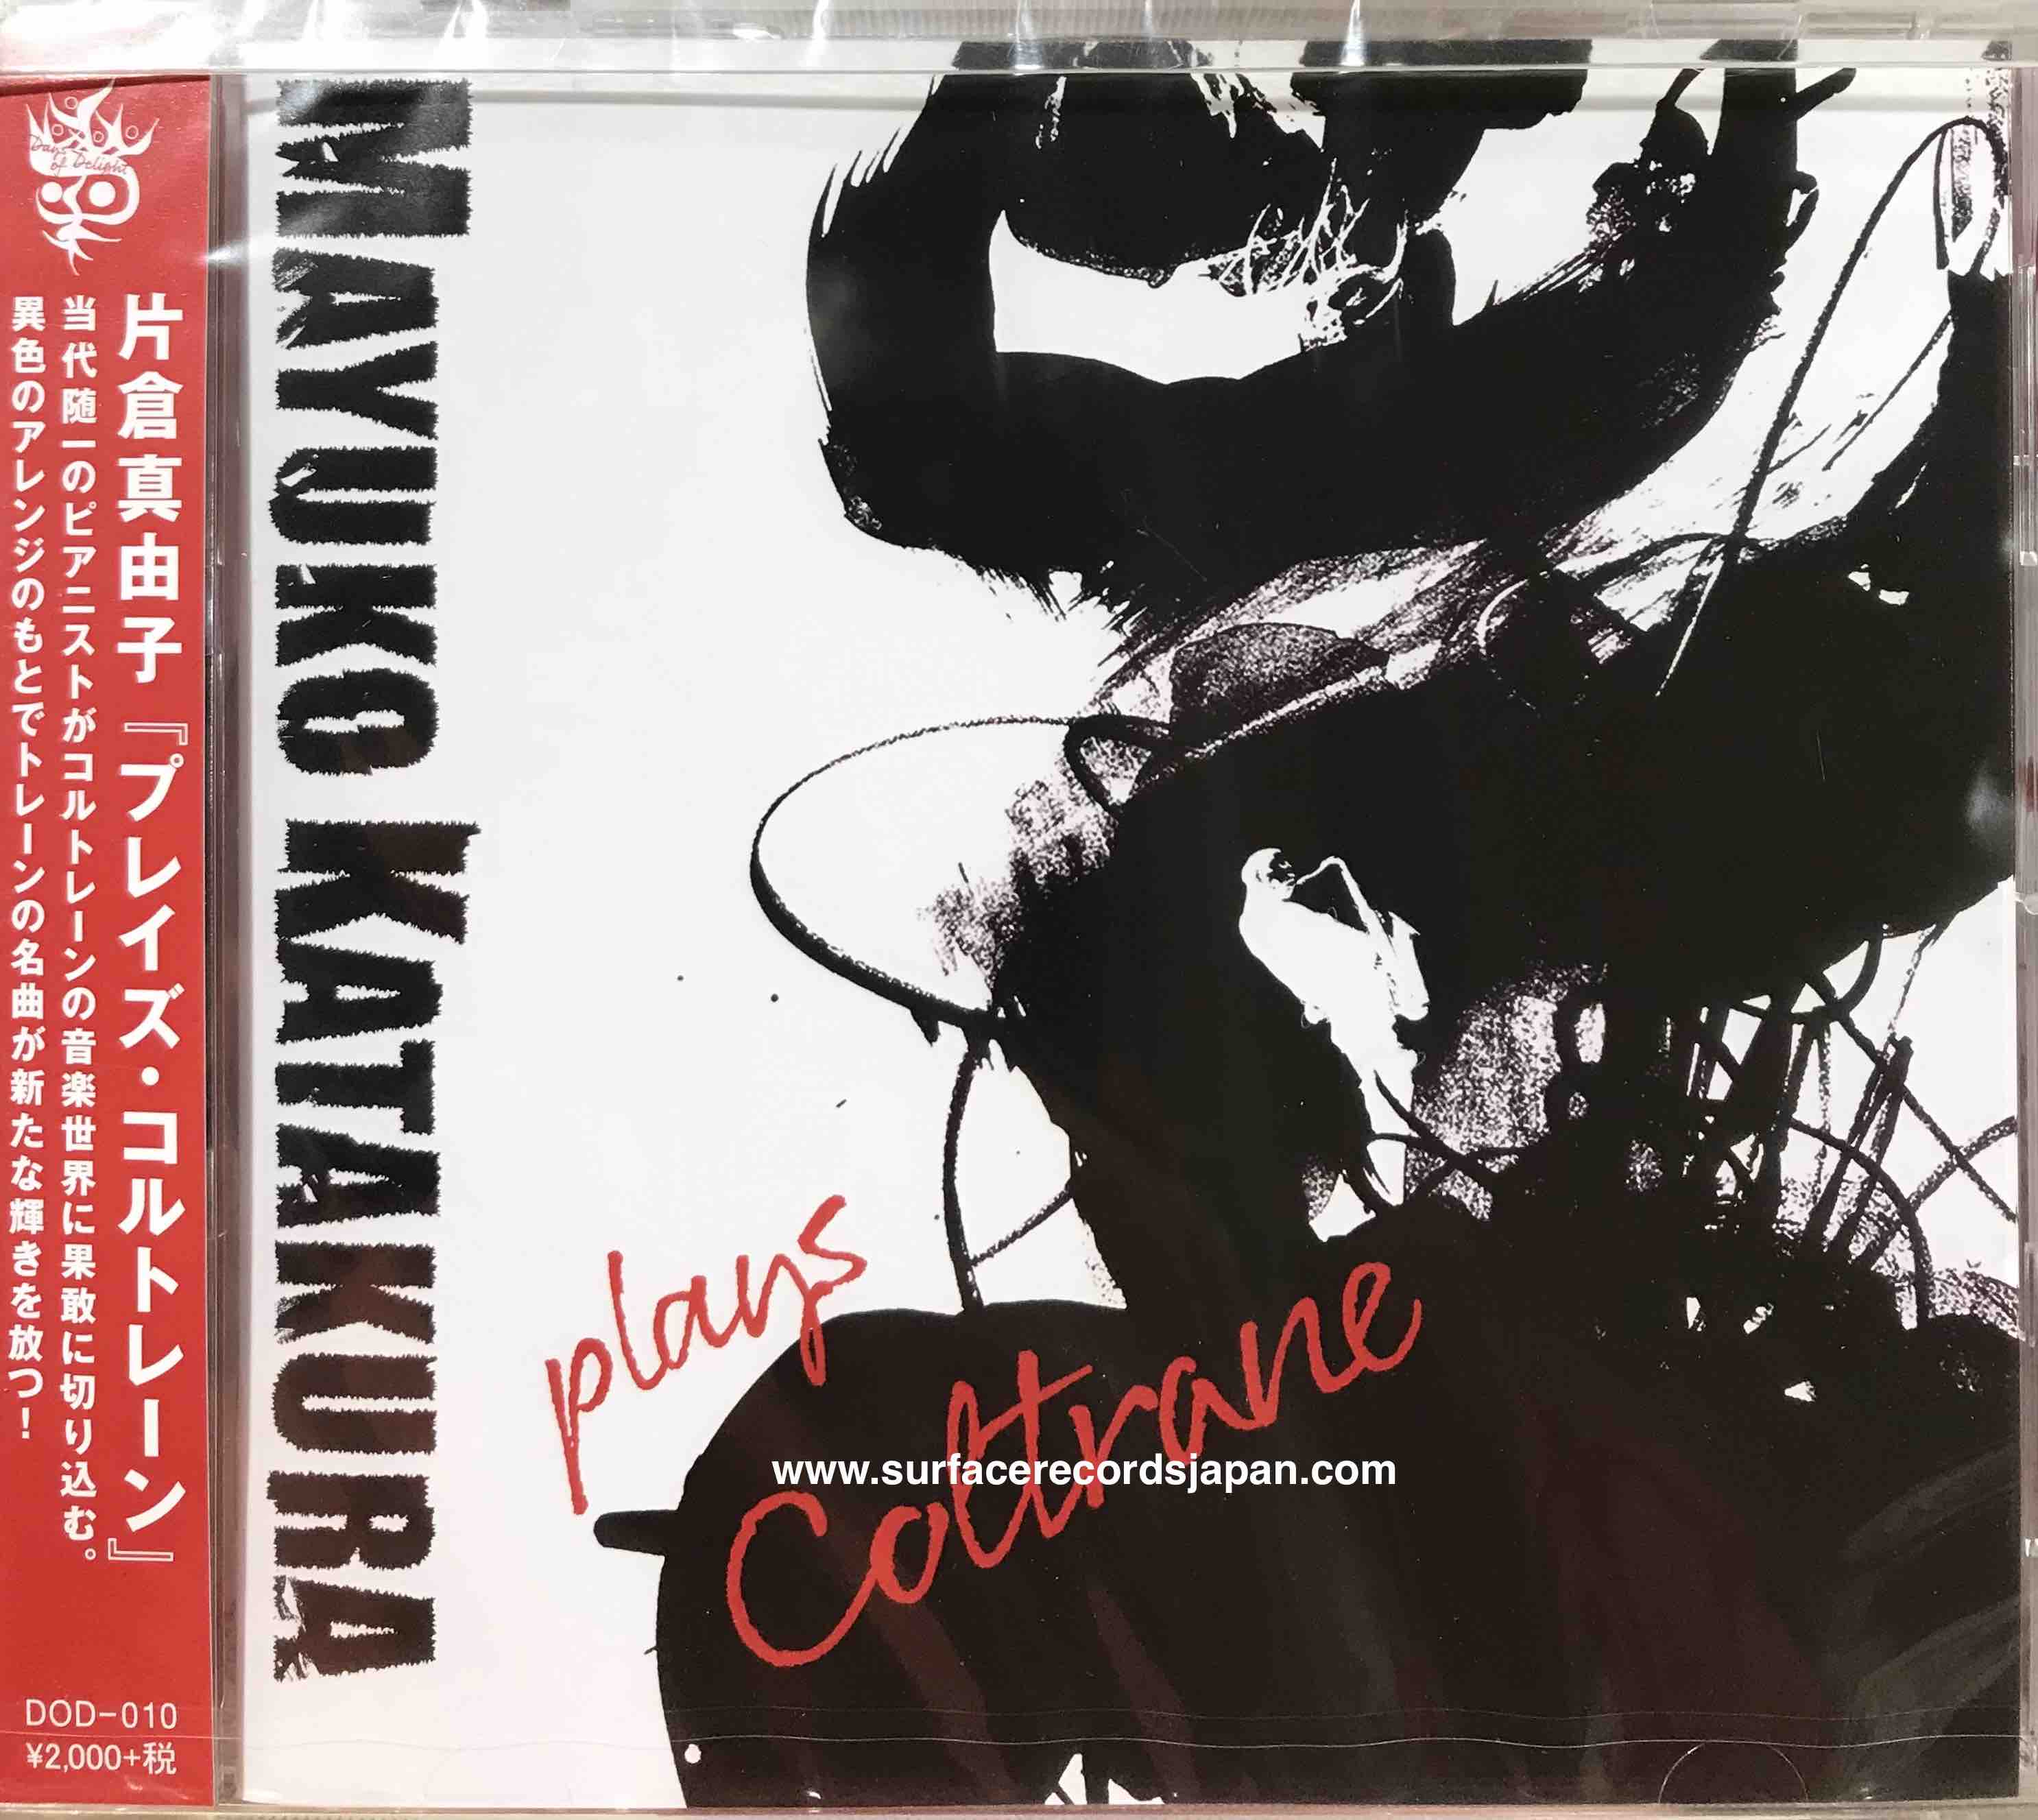 Mayuko Katakura ‎– Plays Coltrane